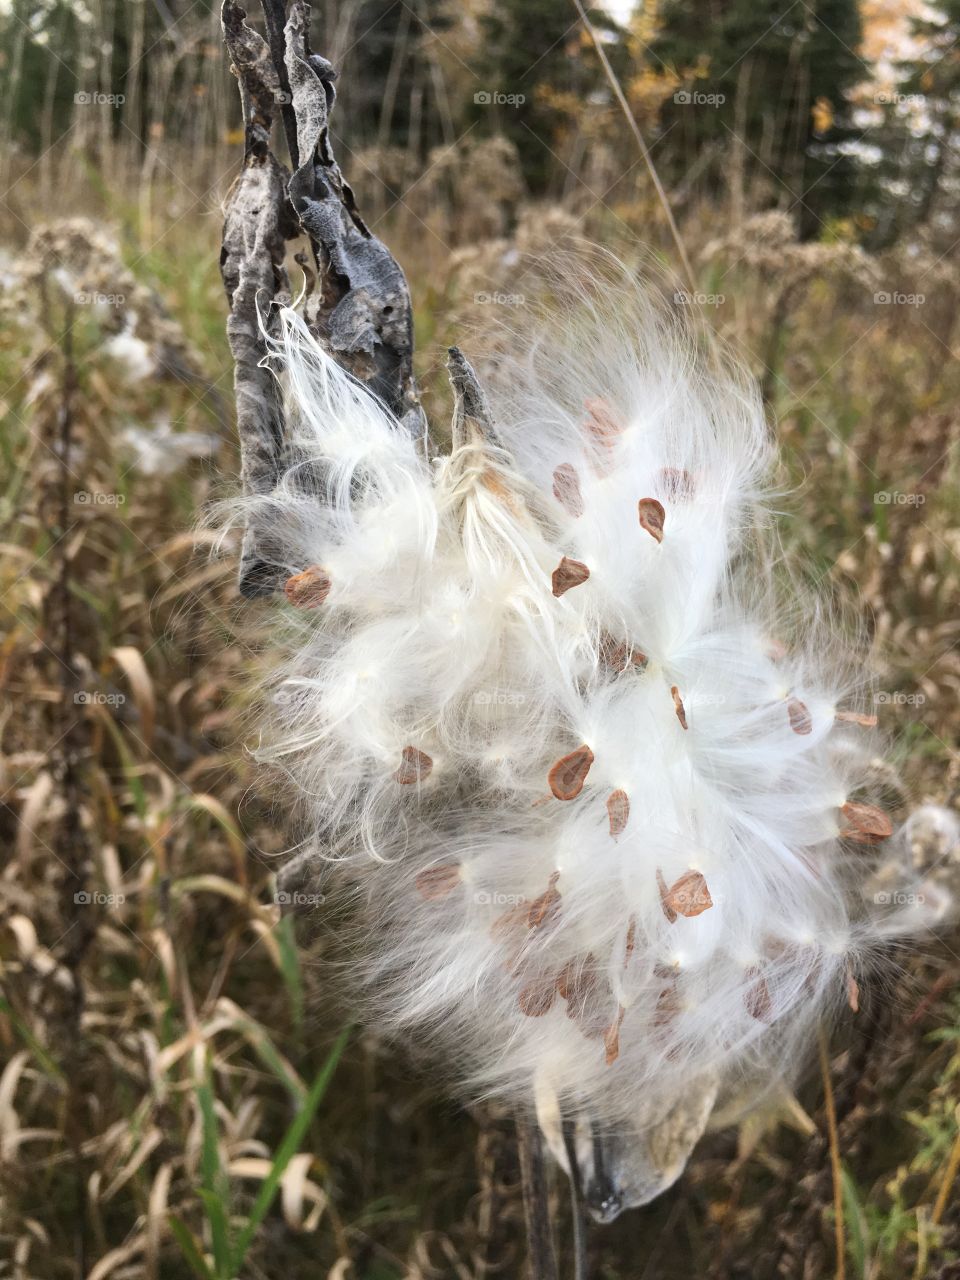 Cotton closeup in the fall breeze